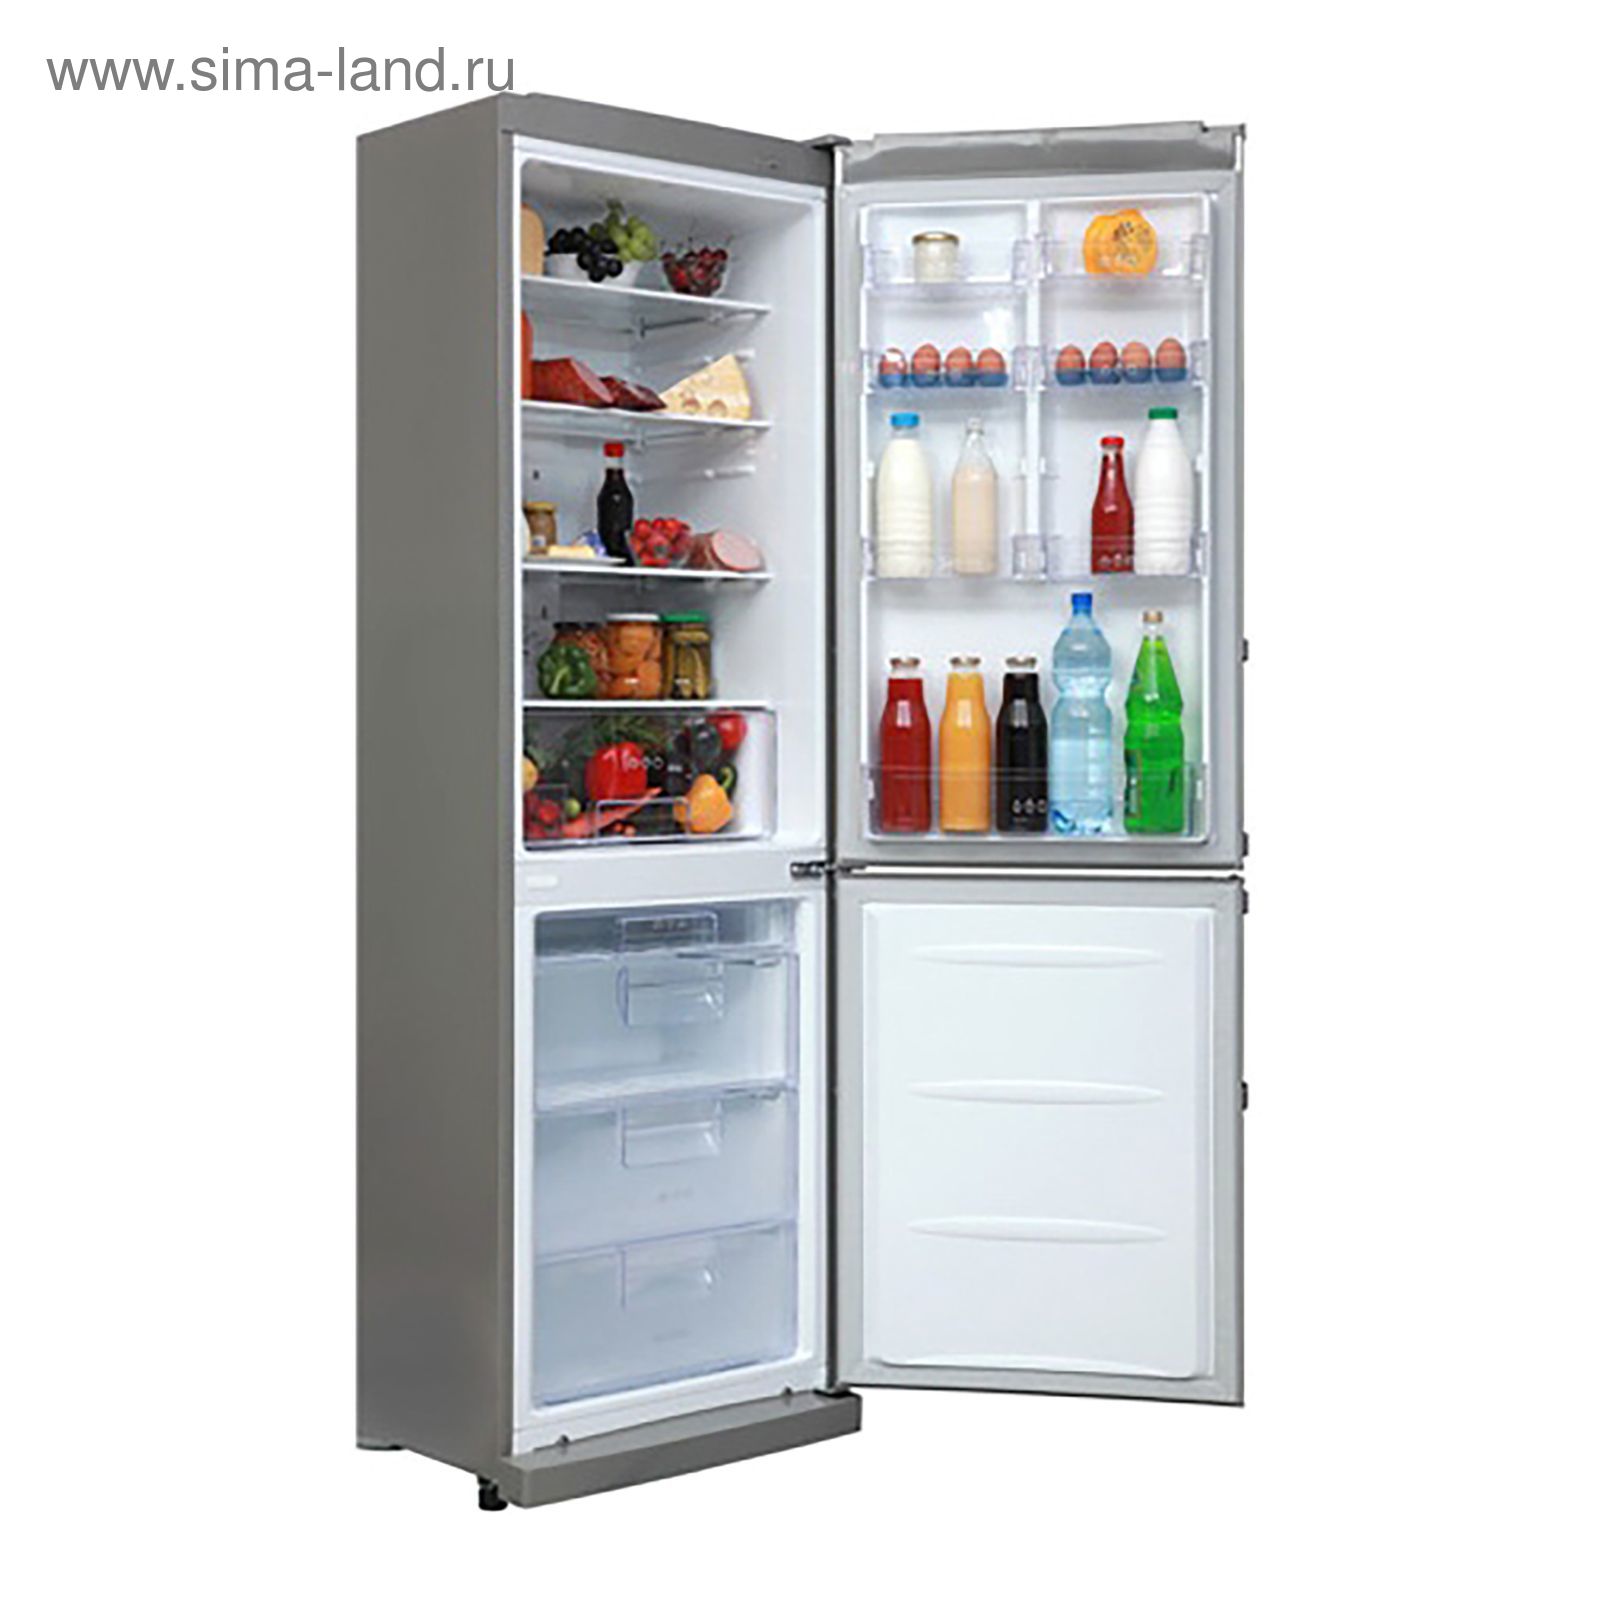 Холодильник LG ga-b379 umda